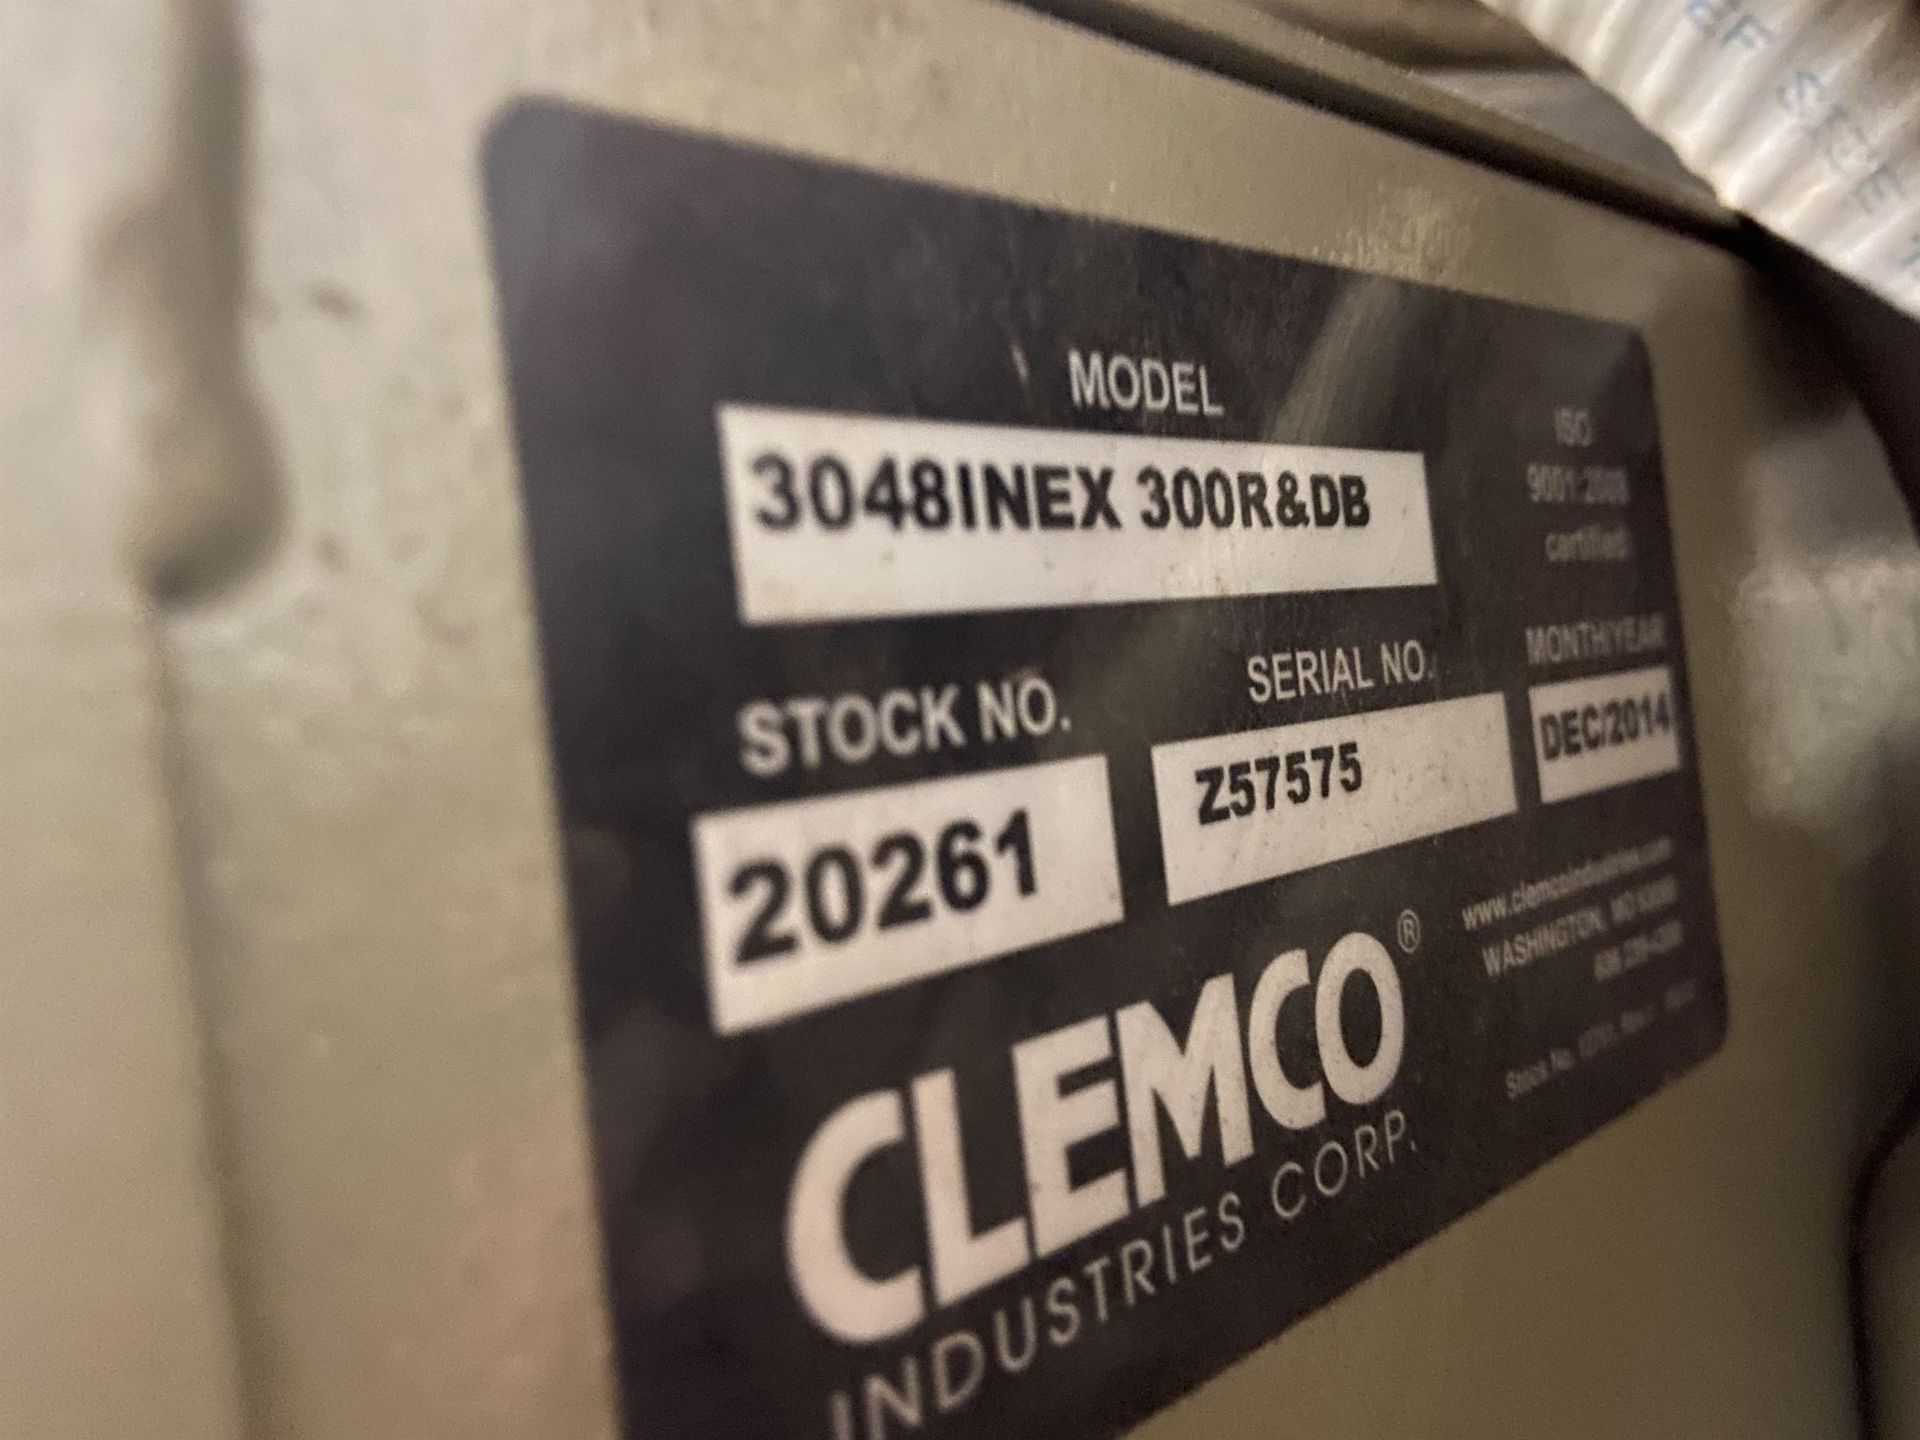 2014 Clemco Model 3048INEX 300R&DB Shot Blasting Cabinet s/n Z57575 - Image 3 of 3